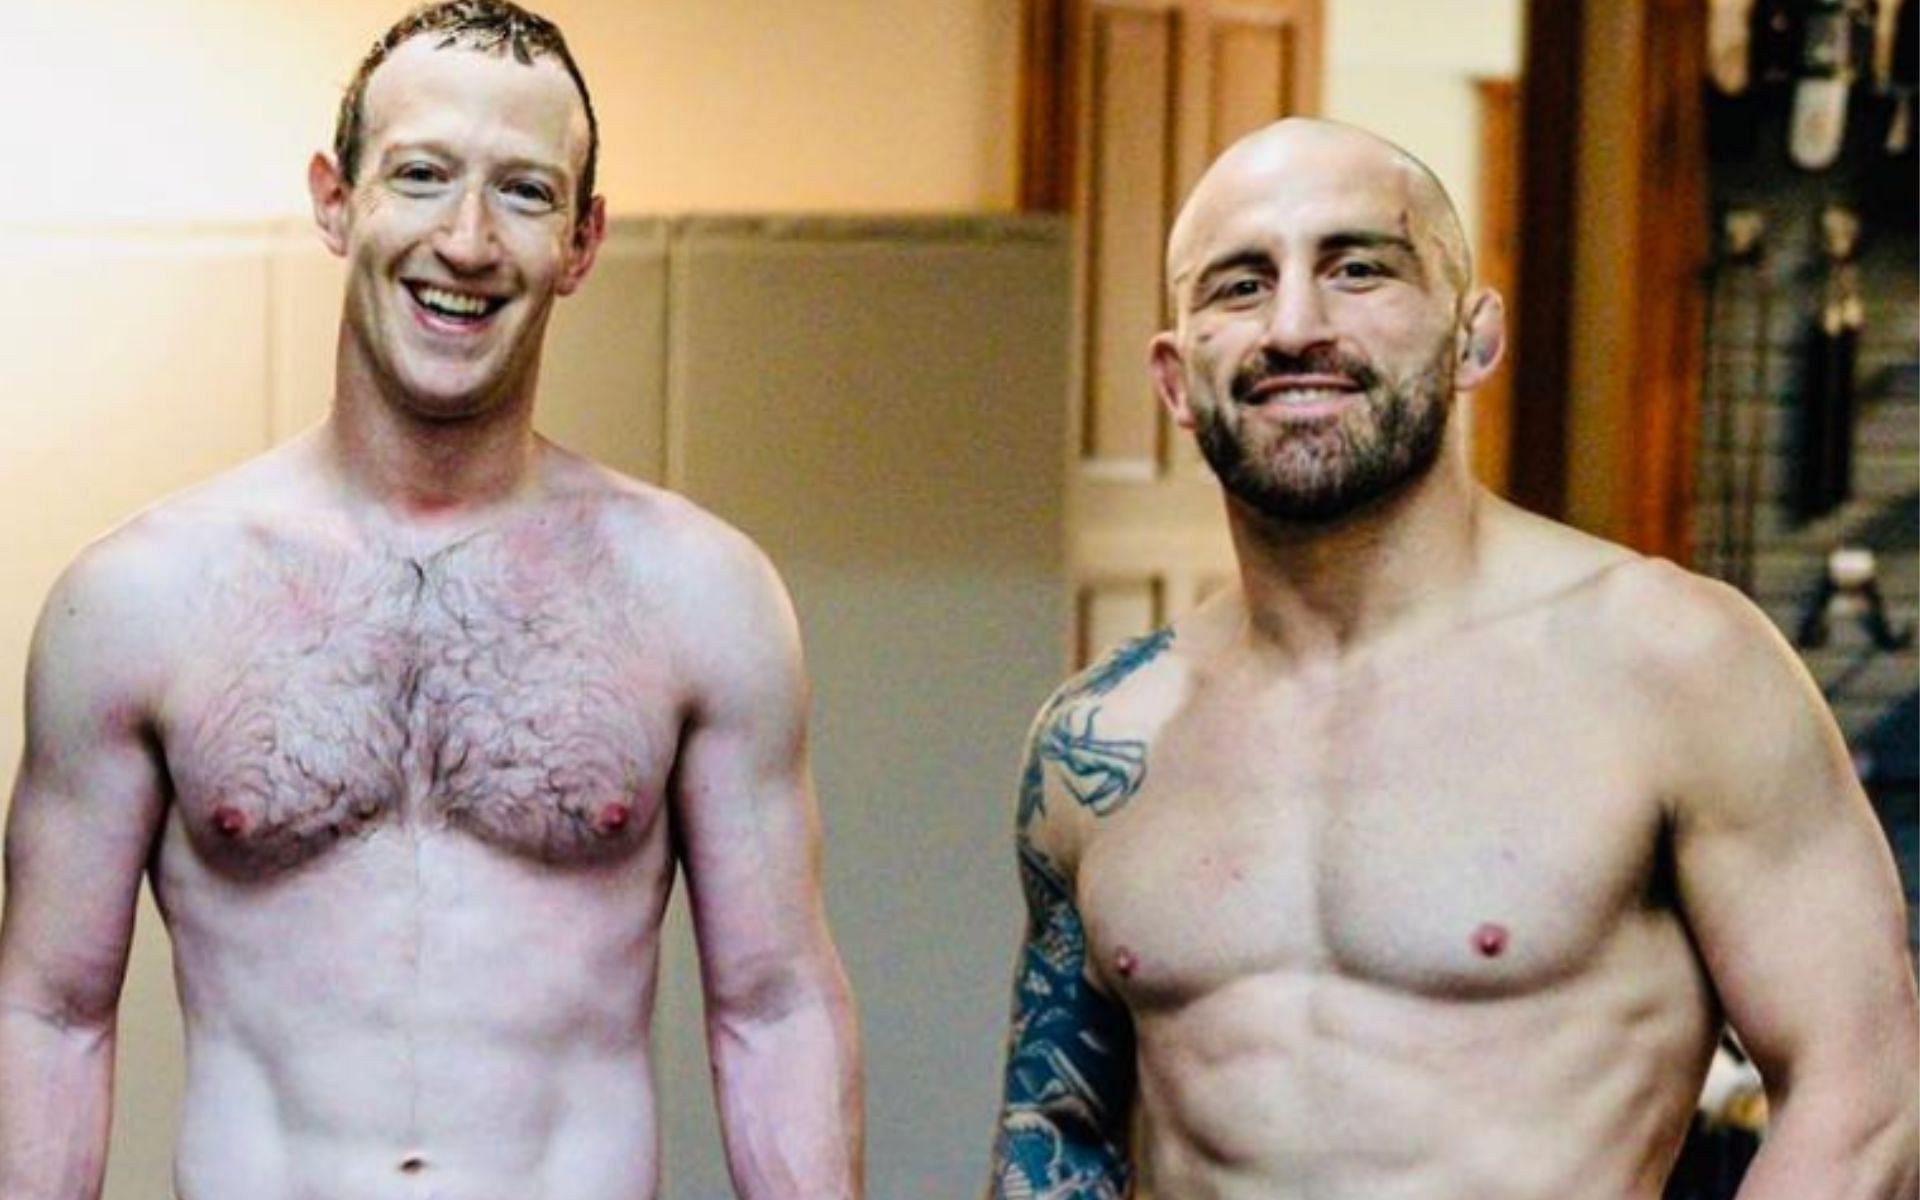 Mark Zuckerberg and Alexander Volkanovski. [via Instagram @alexvolkanovski]